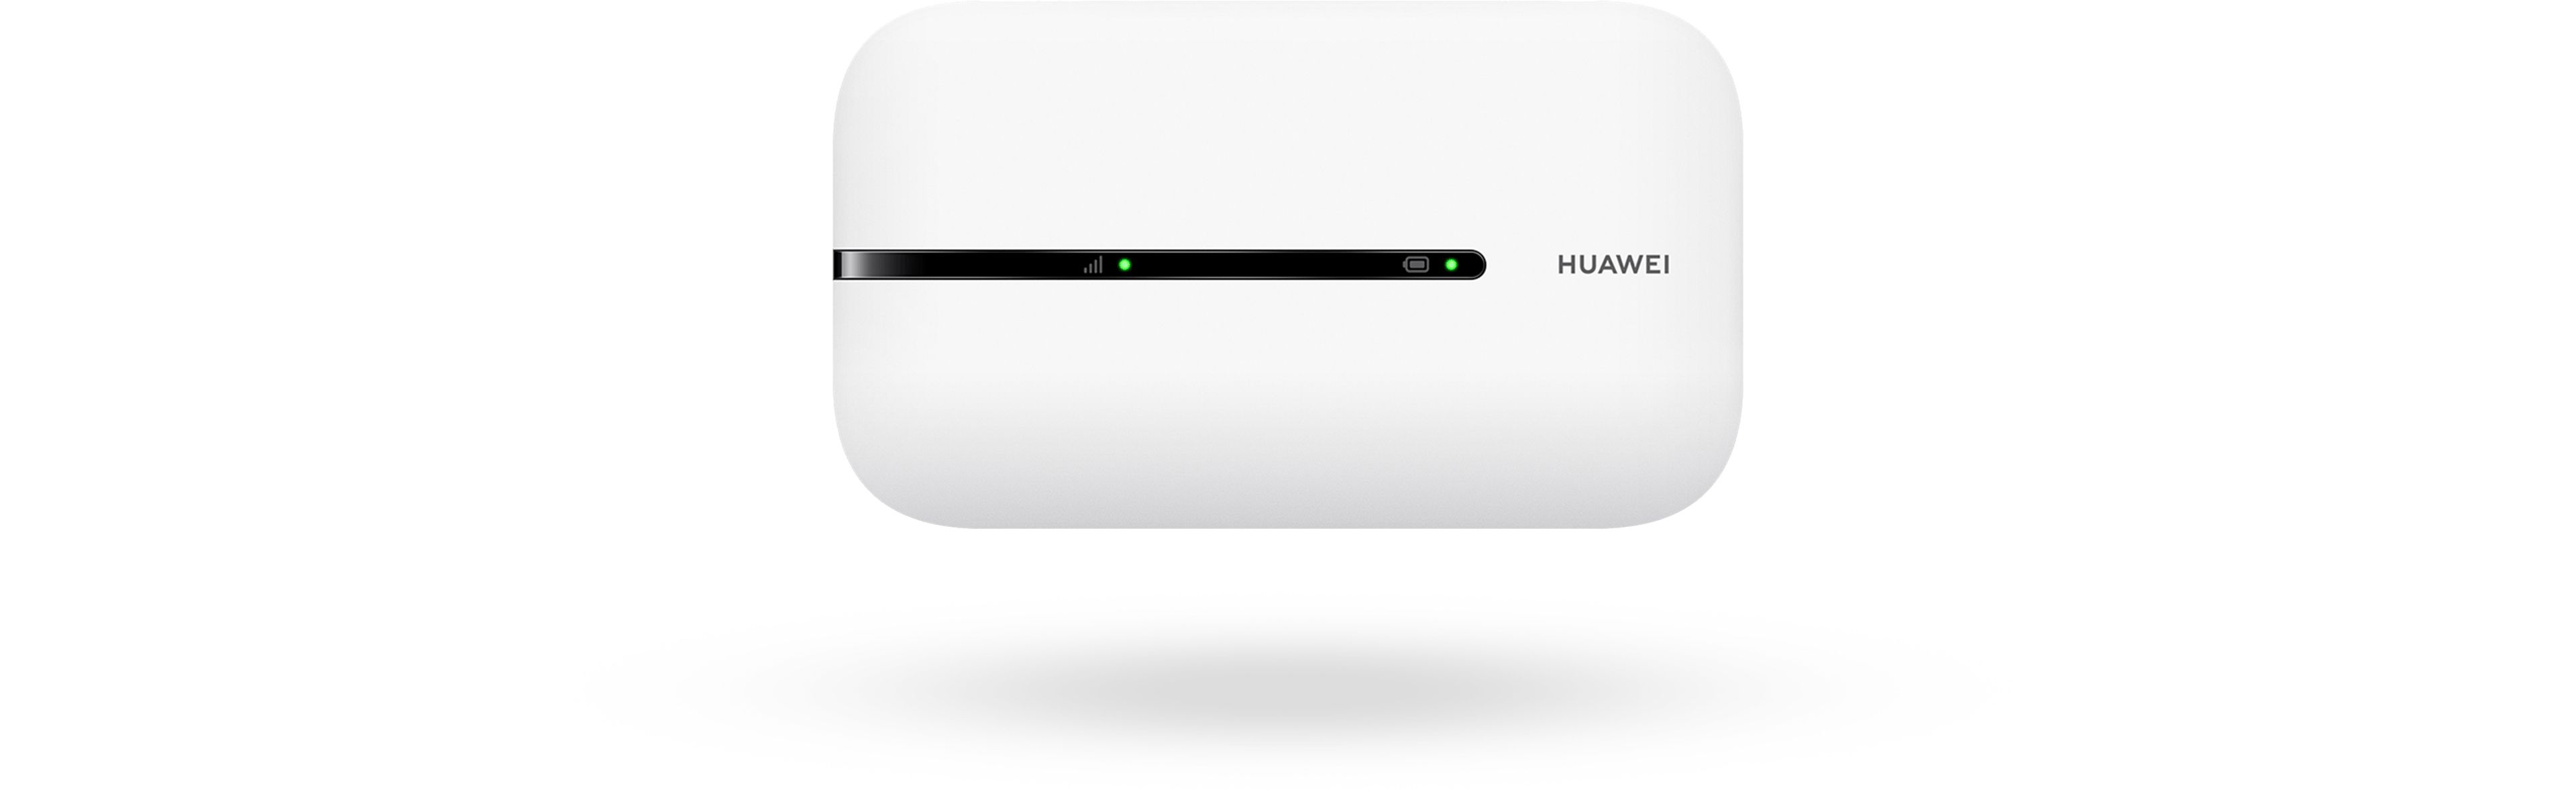 HUAWEI 4G Mobile WiFi